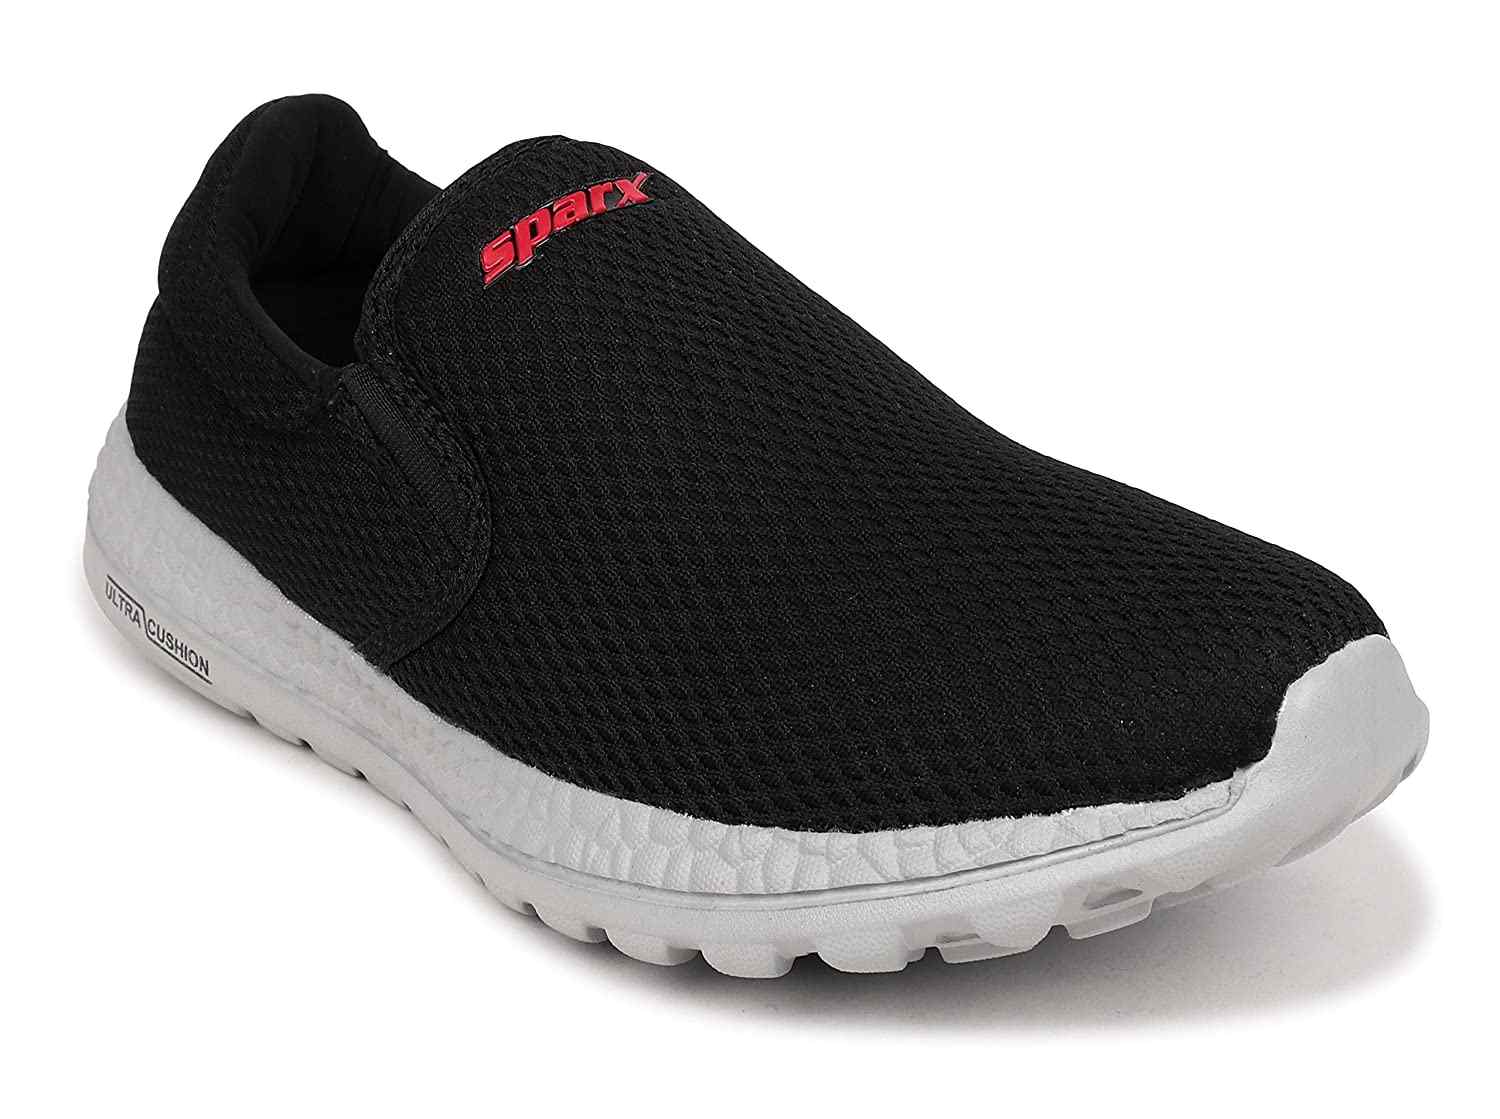 best sparx running shoes